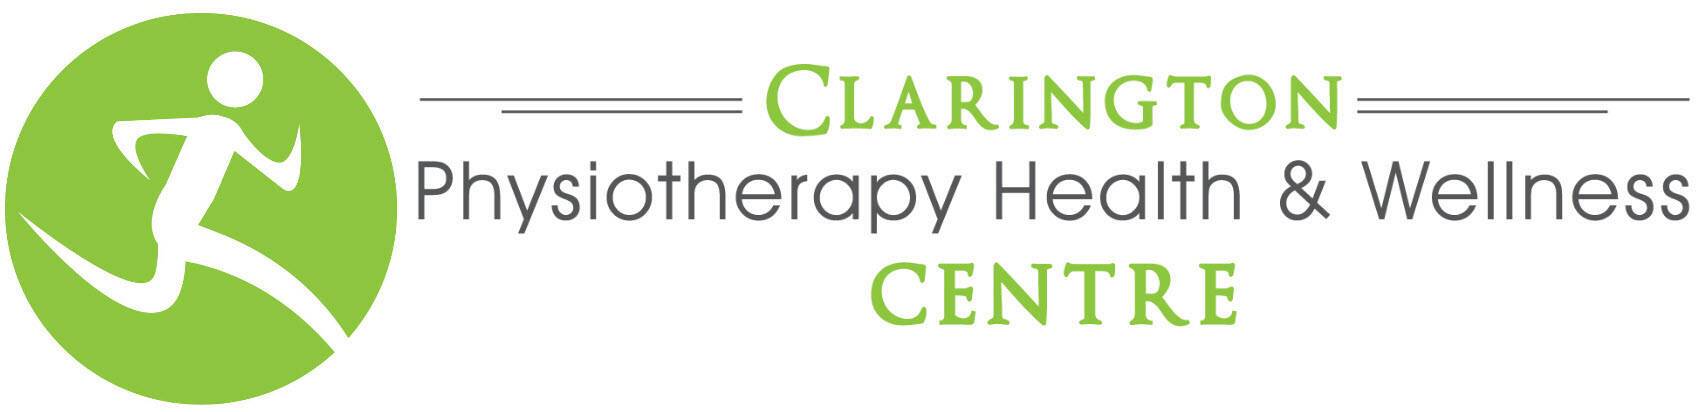 Clarington Physiotherapy Health & Wellness Centre